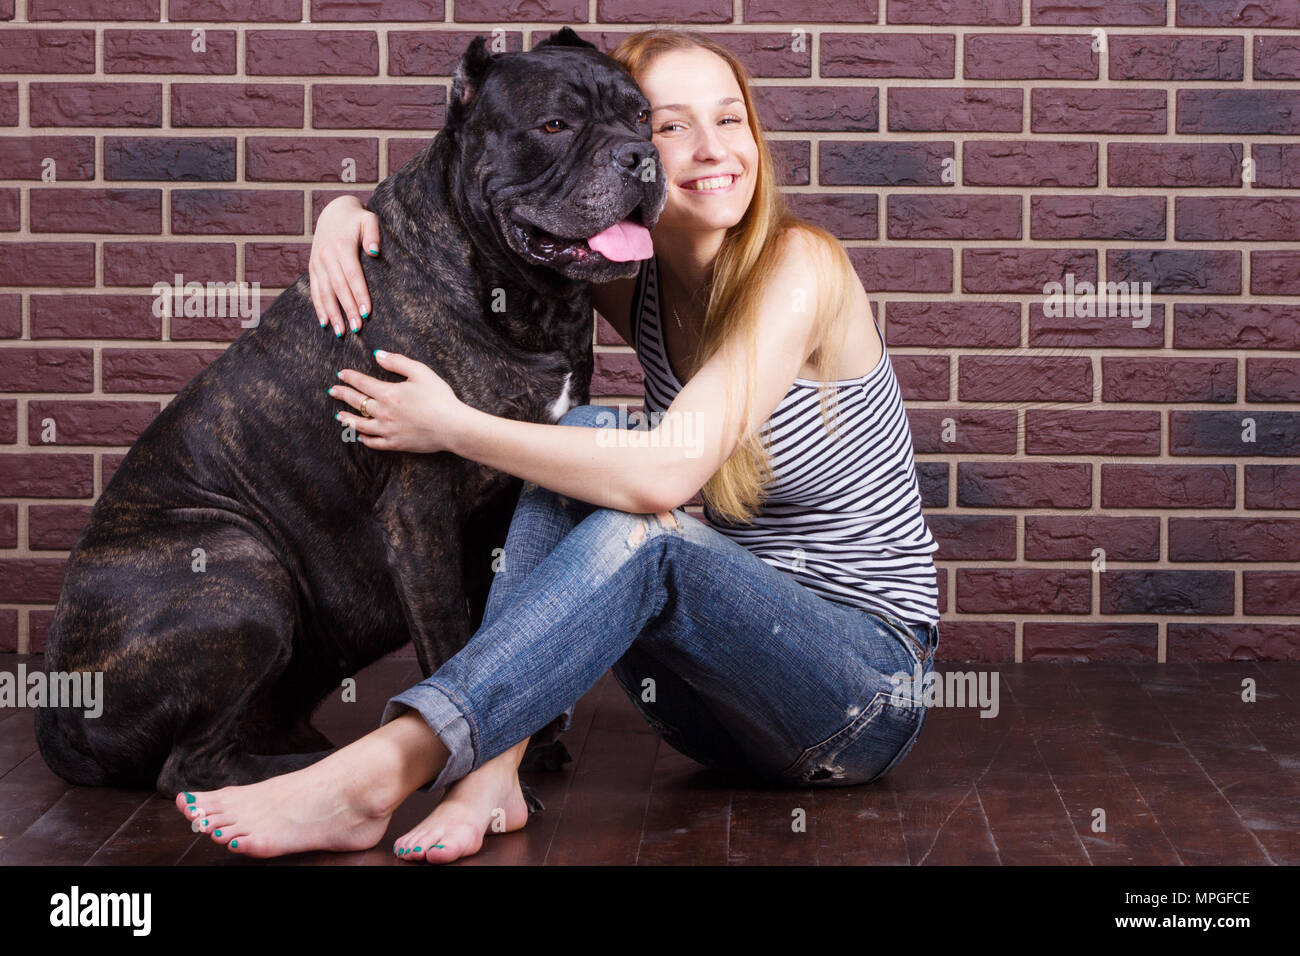 Retrato de una joven abrazando un gran perro Cane Corso Foto de stock